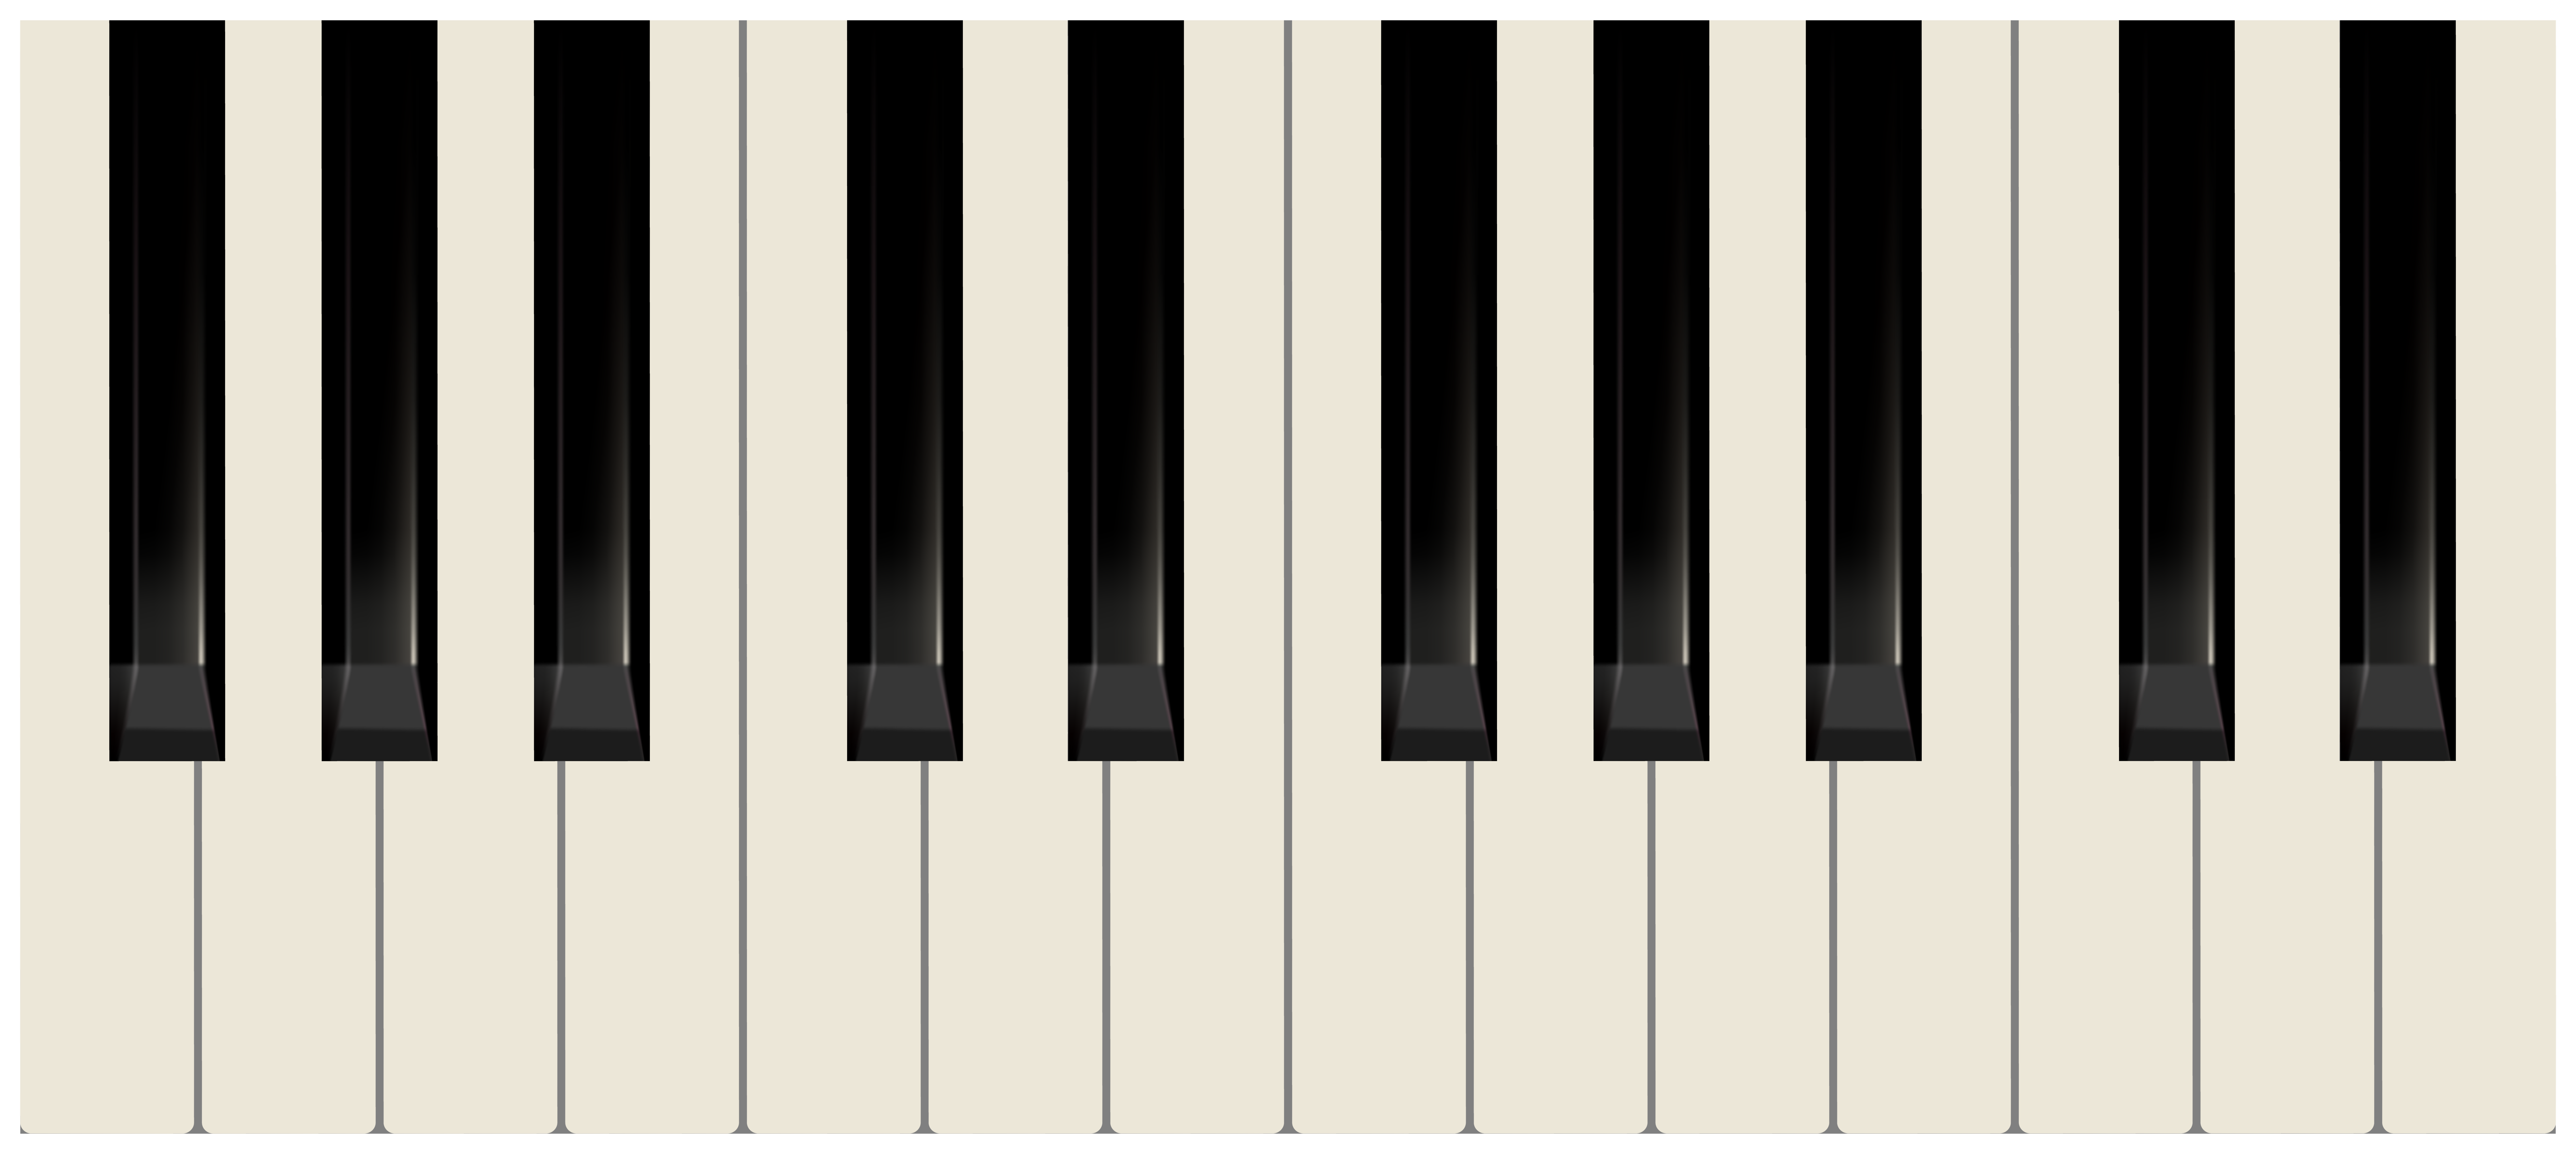 Piano Keys Transparent Image